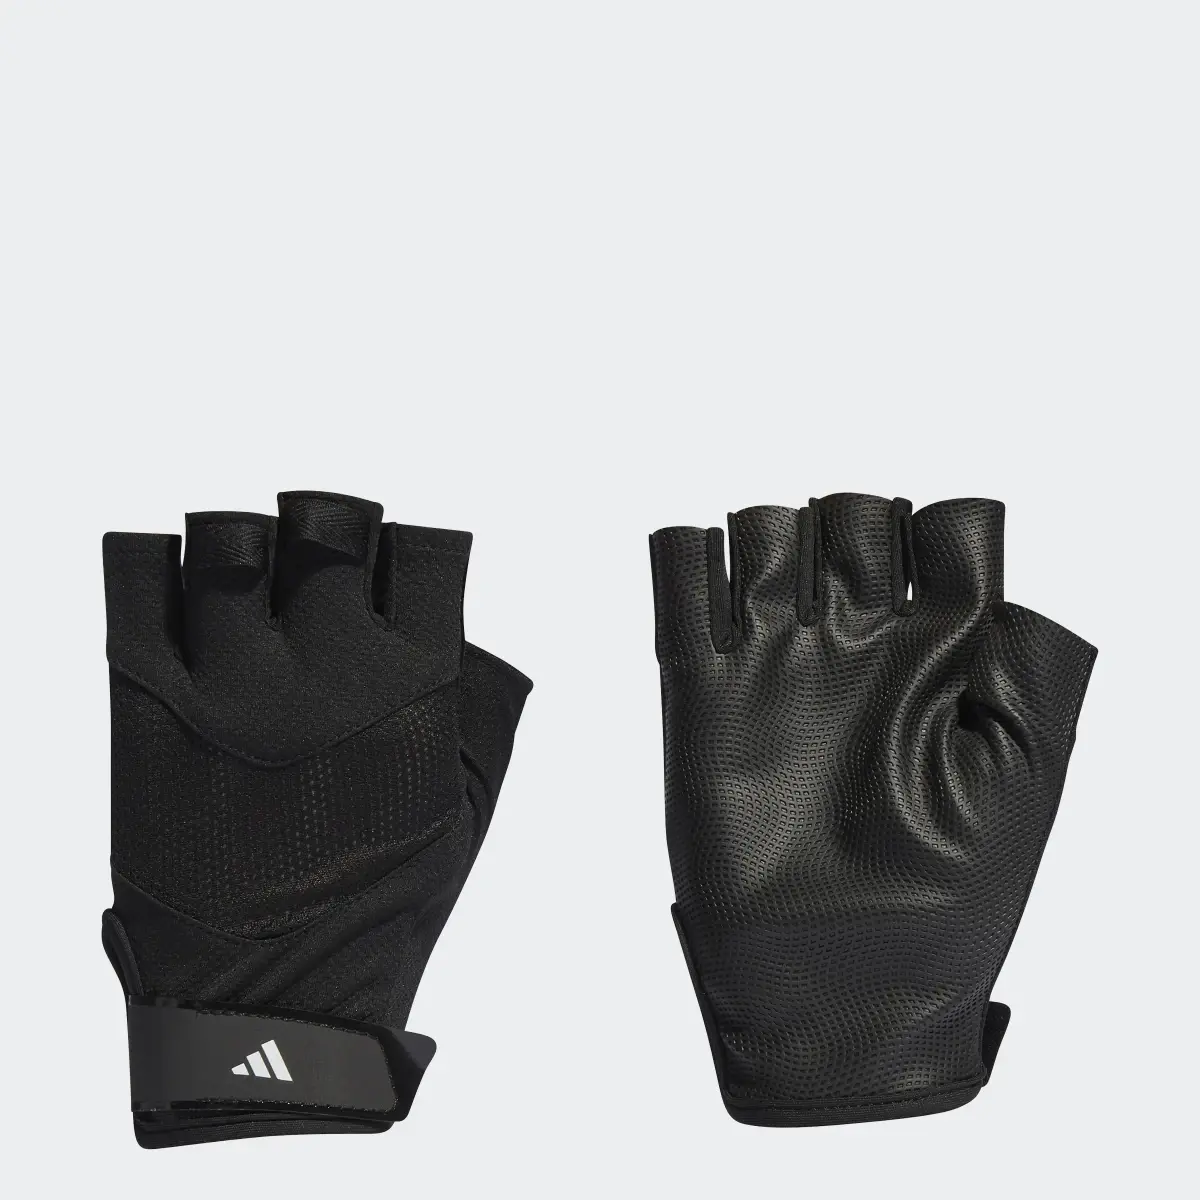 Adidas Training Gloves. 1